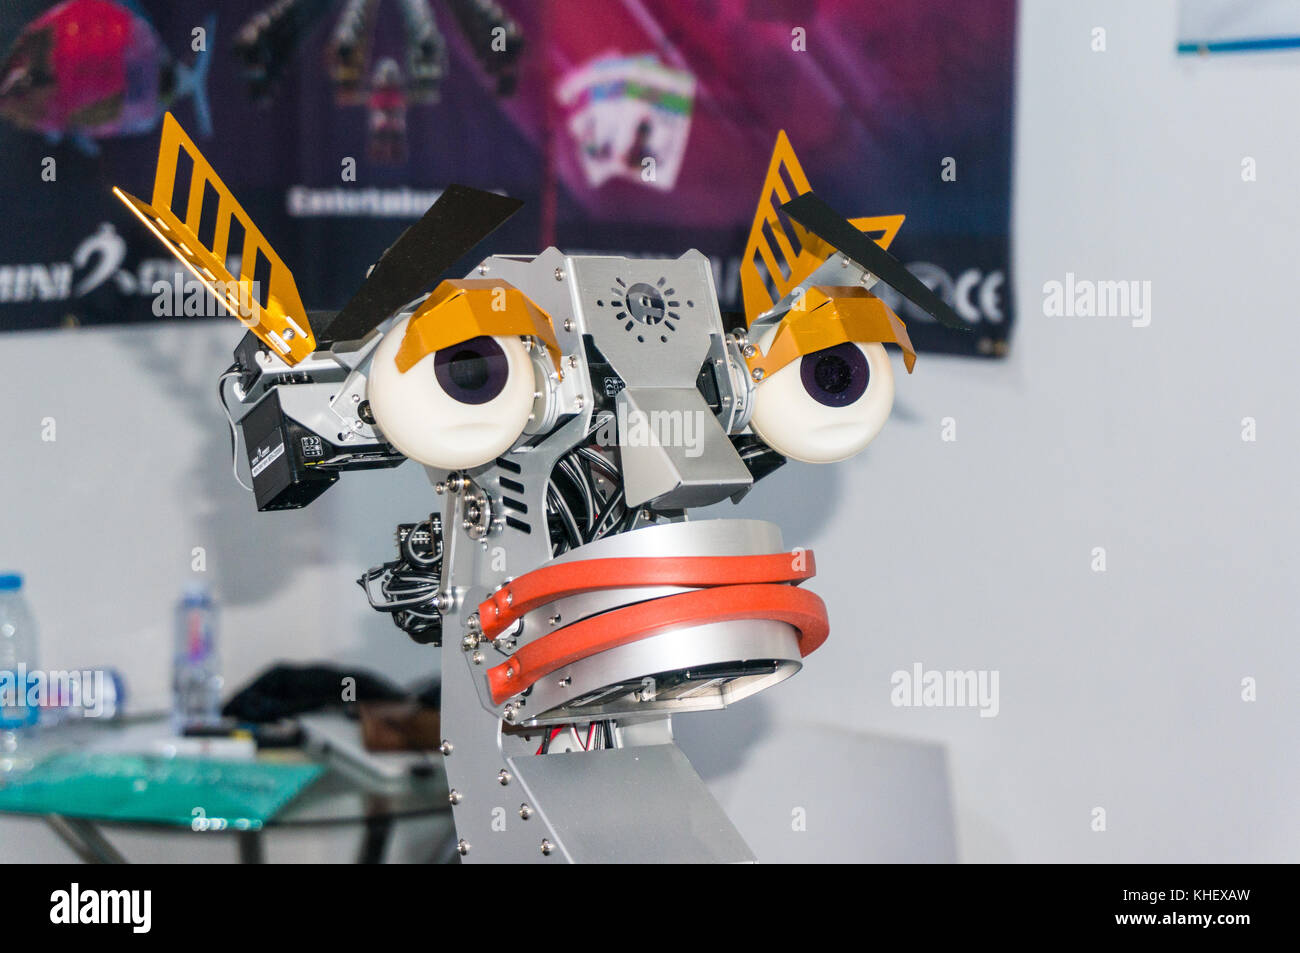 Funny Korean robot minirobot face facial expressions at China hi-tech fair in Shenzhen, known as 'Silicon Valley of China', Shenzhen, China. Stock Photo